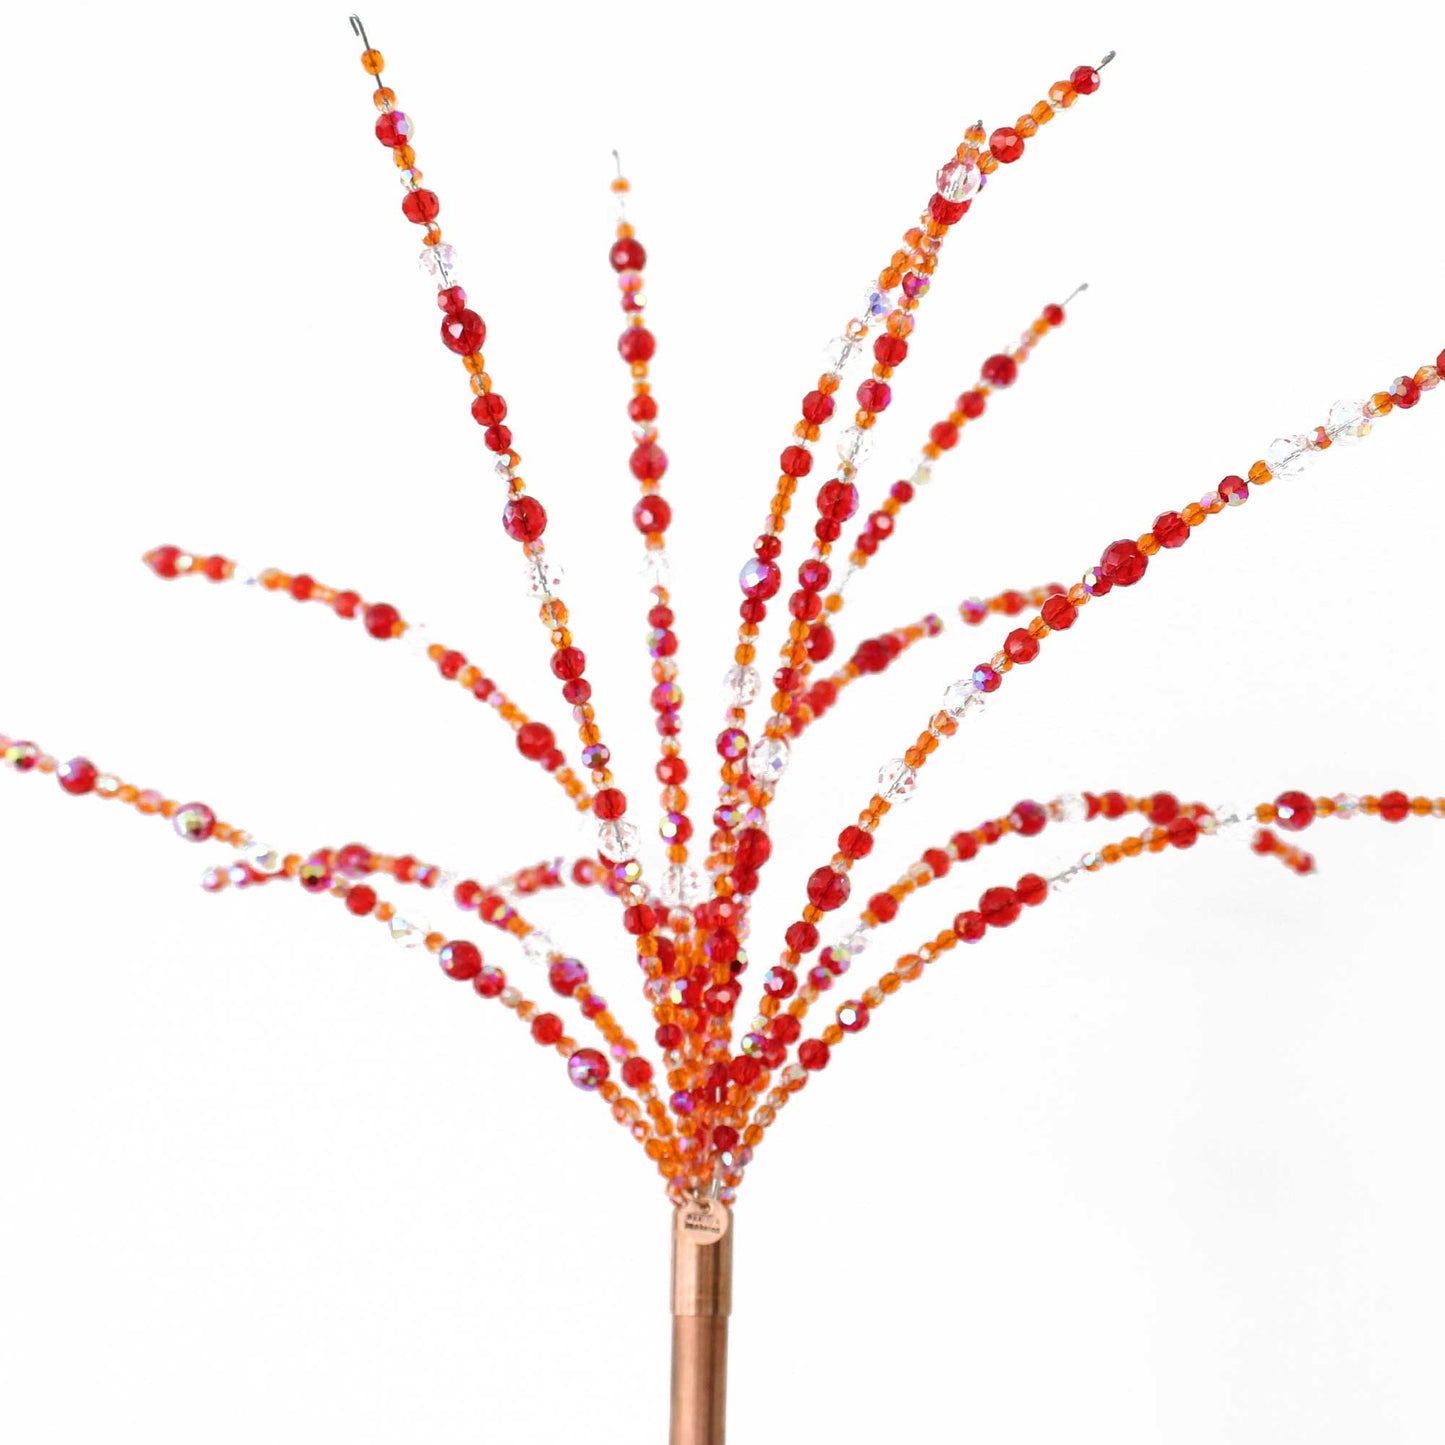 Red and Orange Crystal Bead Garden Sparkler